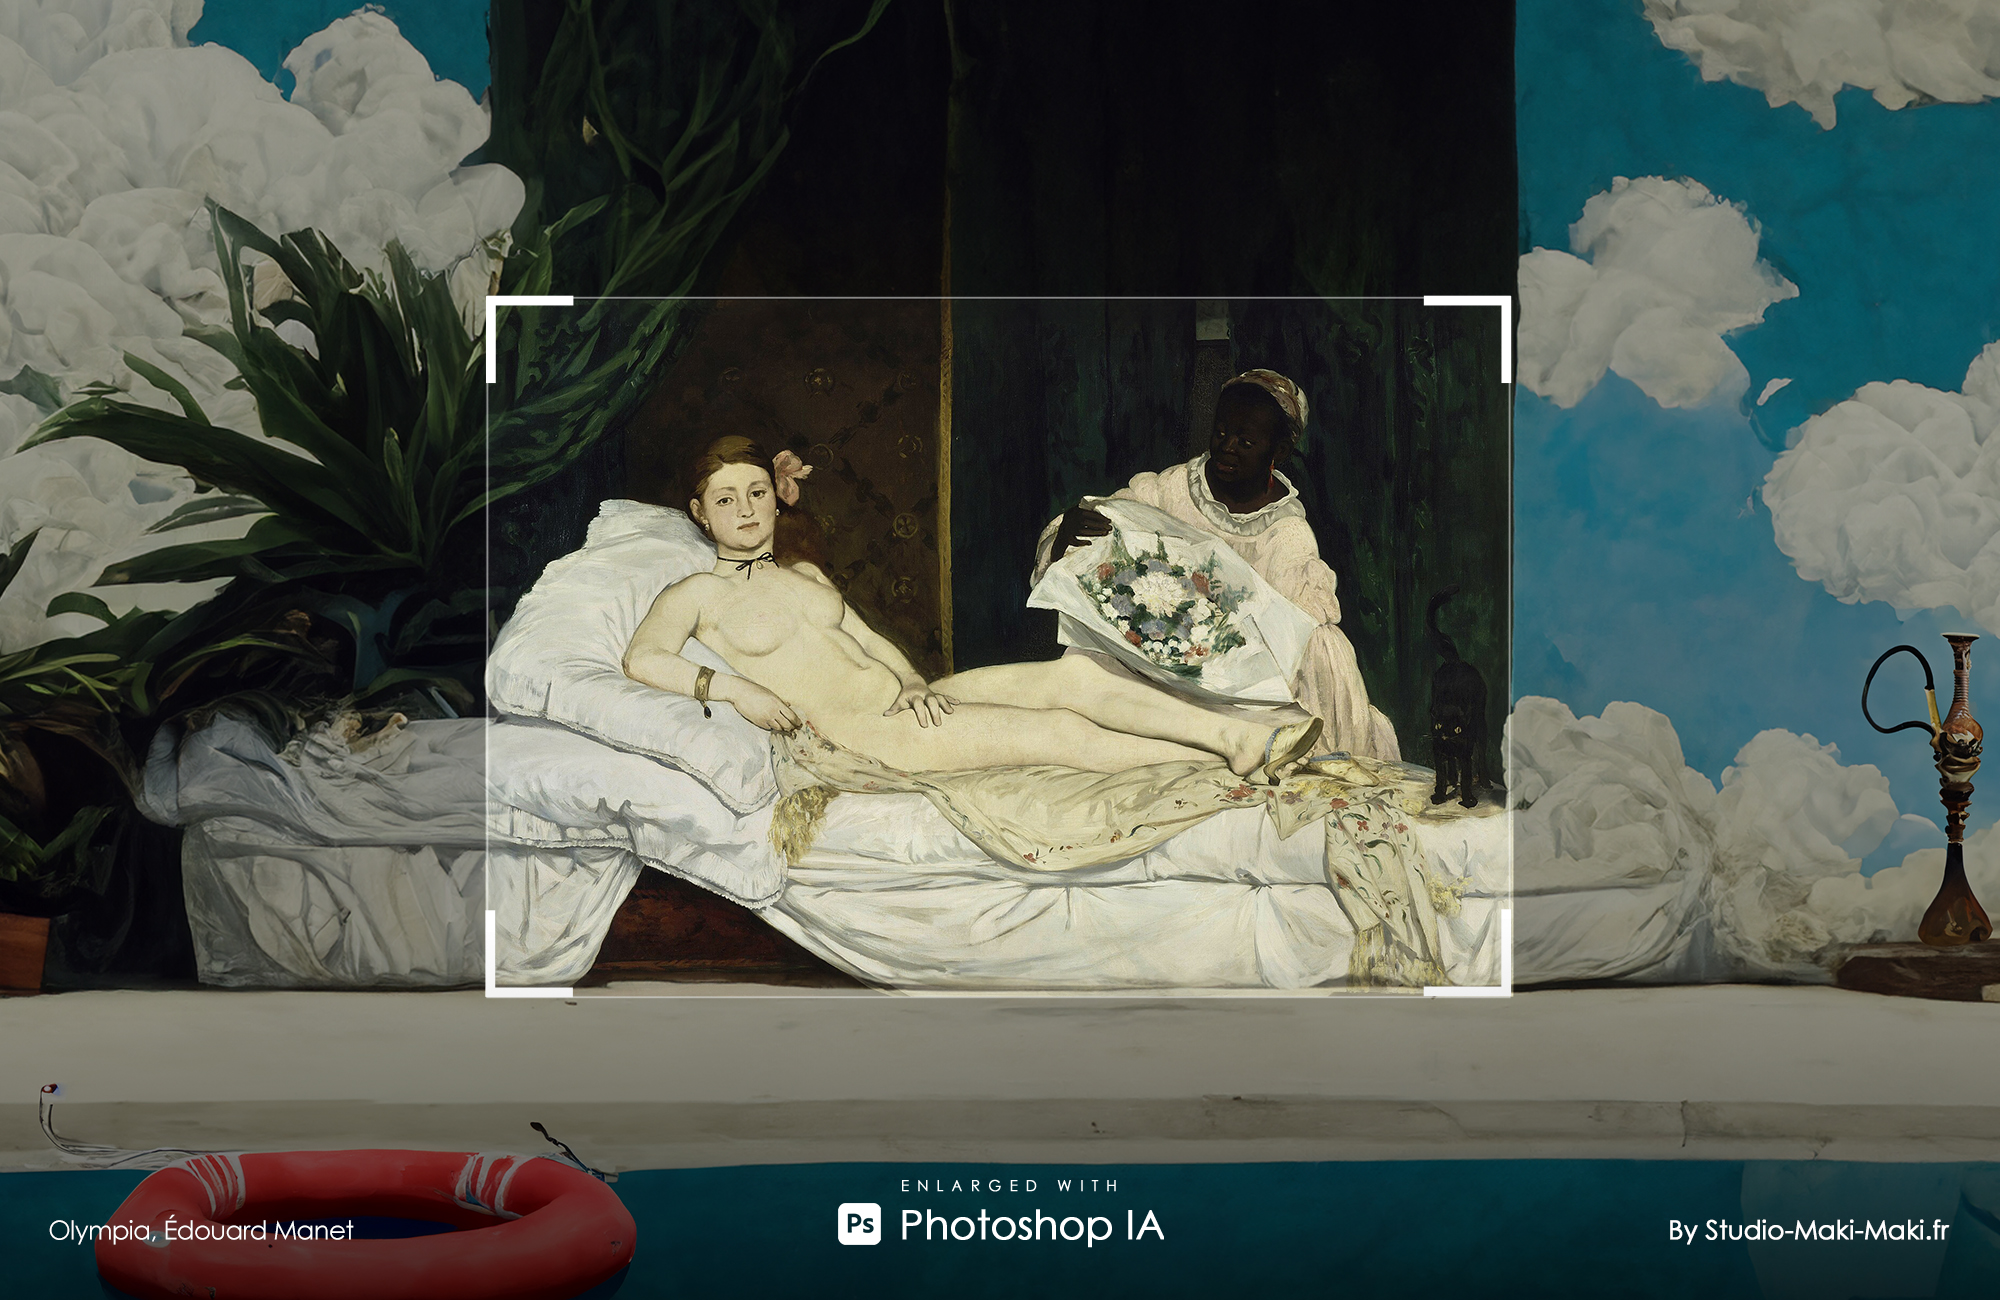 Olympia, Édouard Manet - Enlarged with Photoshop IA - By Studio Maki Maki